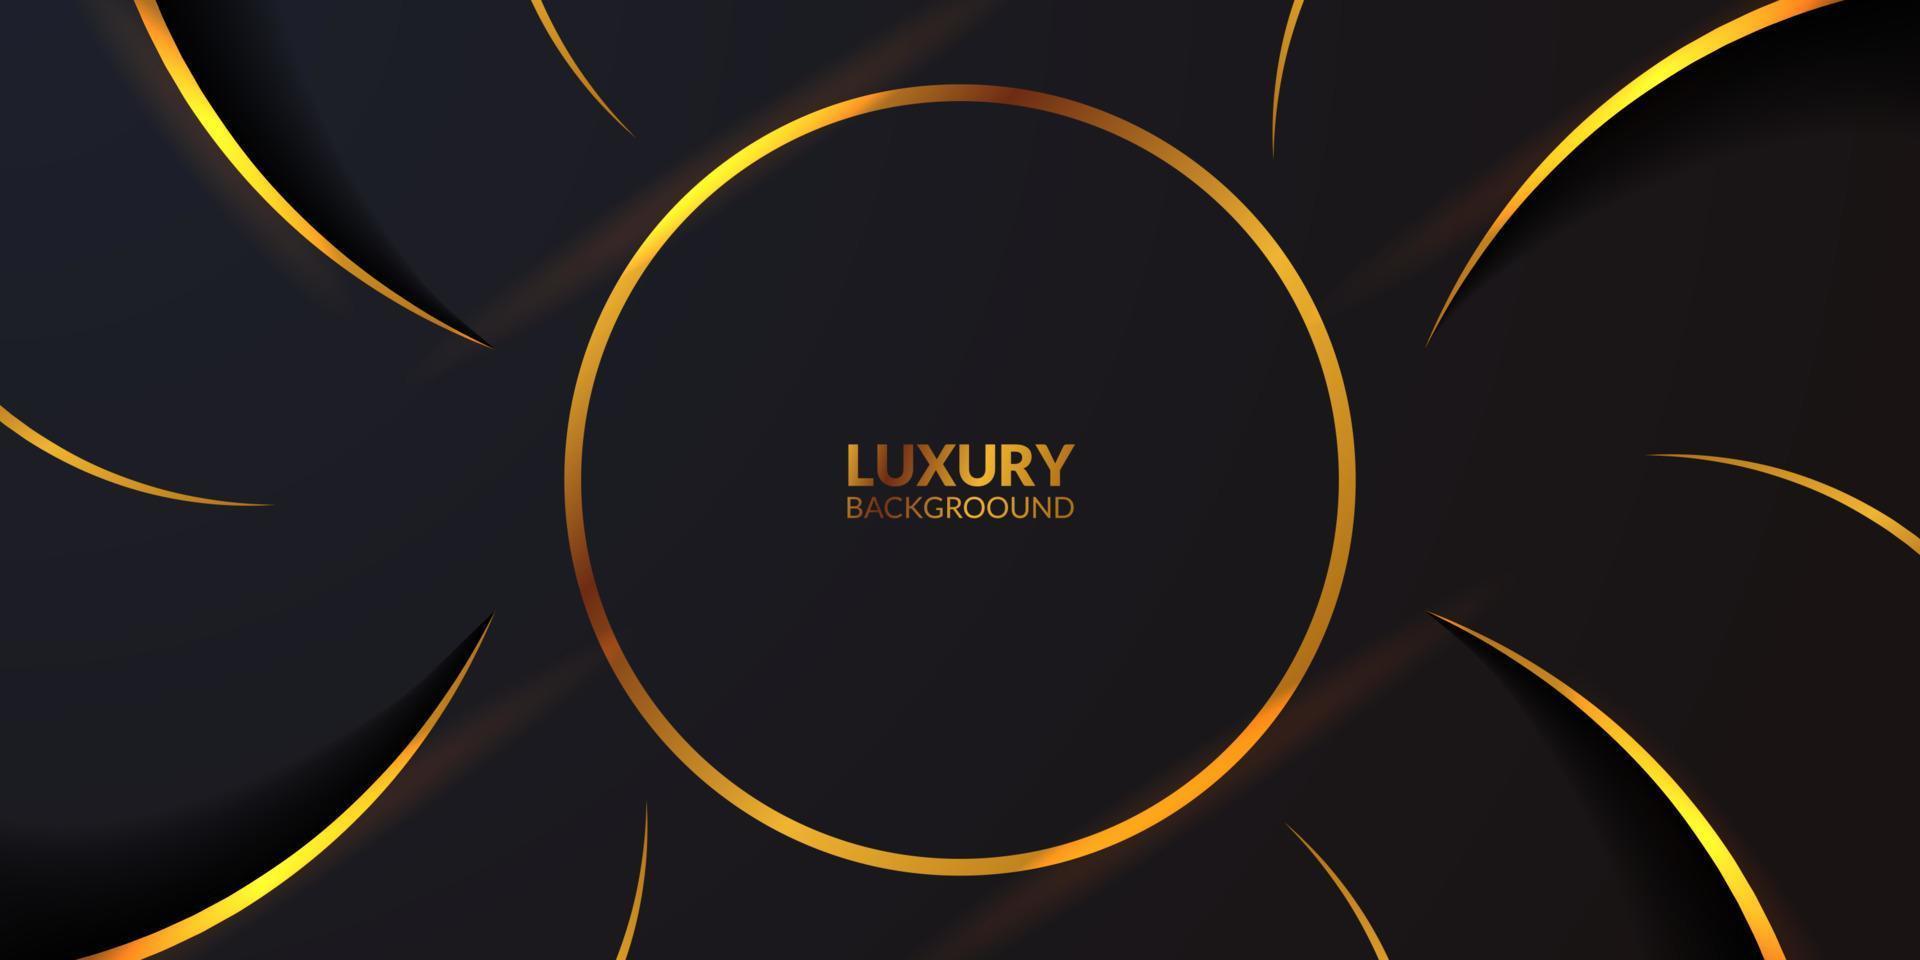 luxury elegant premium black dark with golden accent decoration banner background for winner award template vector